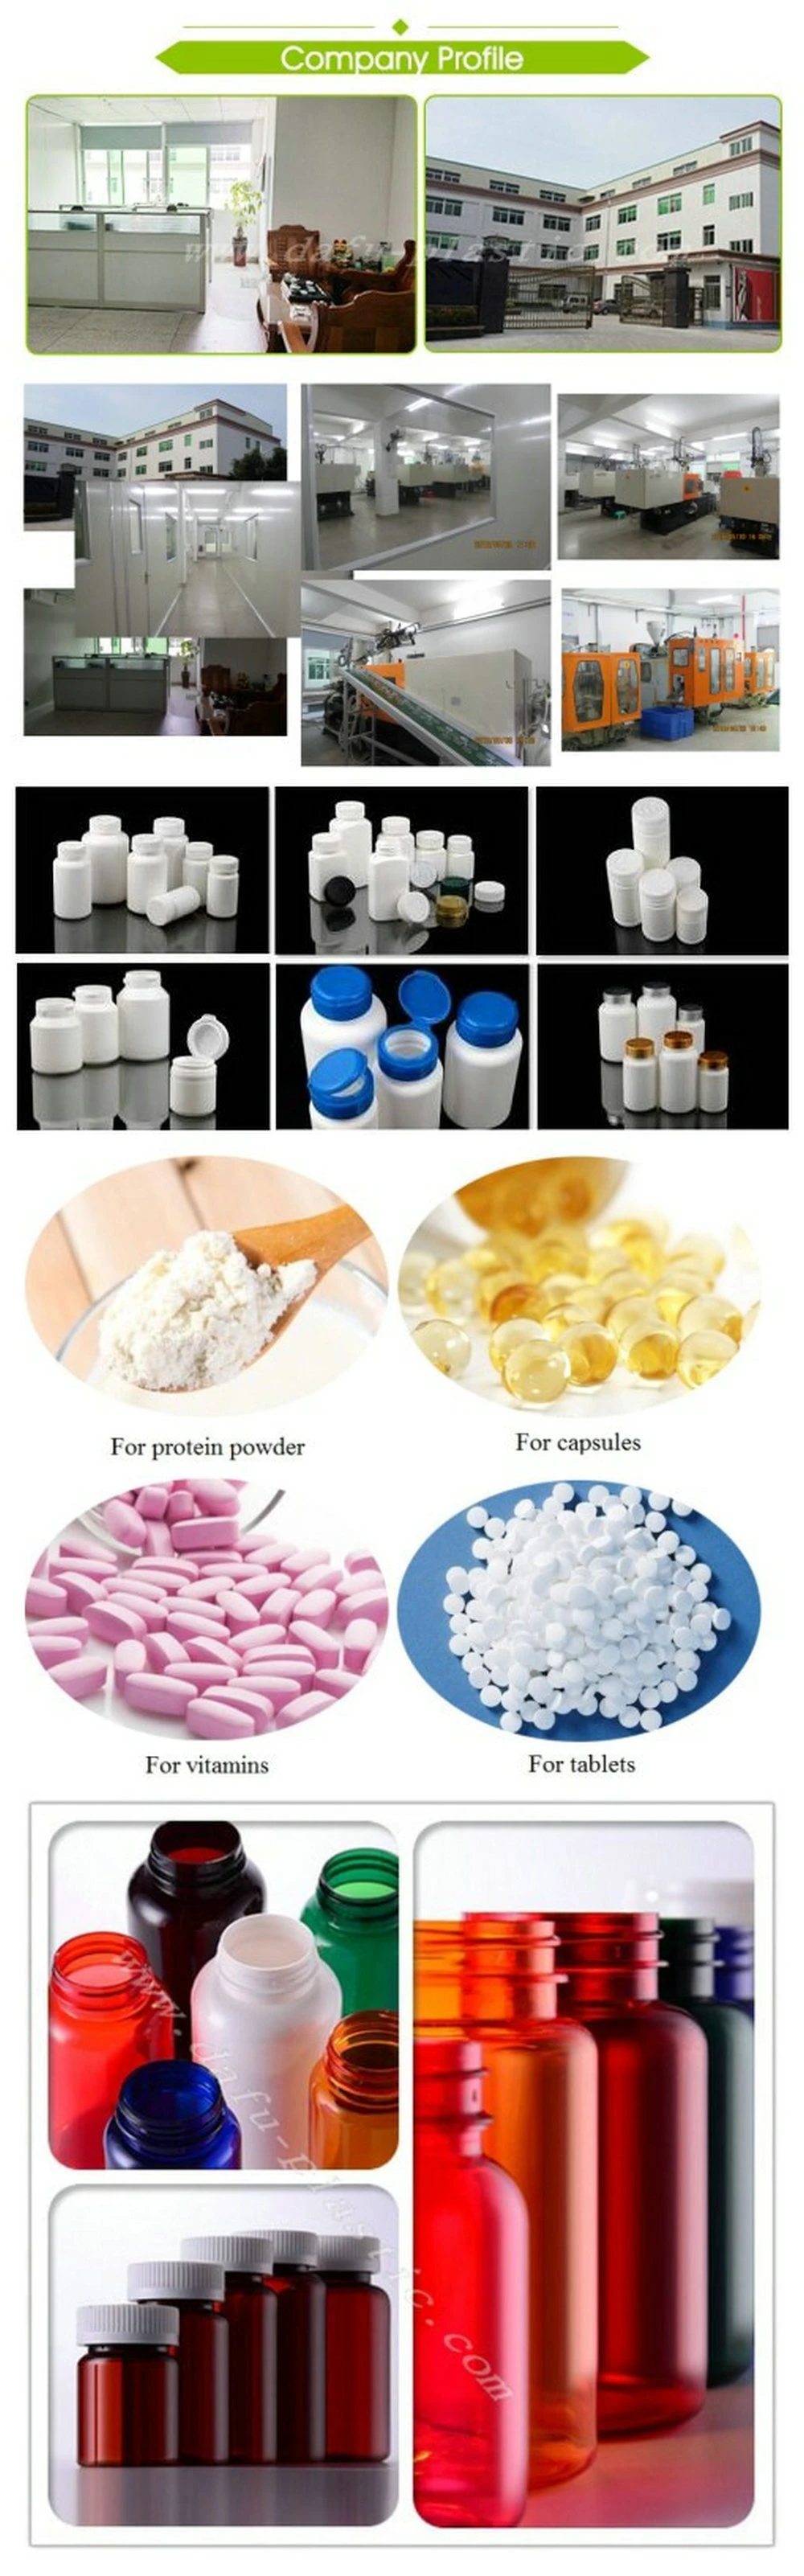 Plastic Products 150ml HDPE Plastic Medicine Bottle with Screw Cap